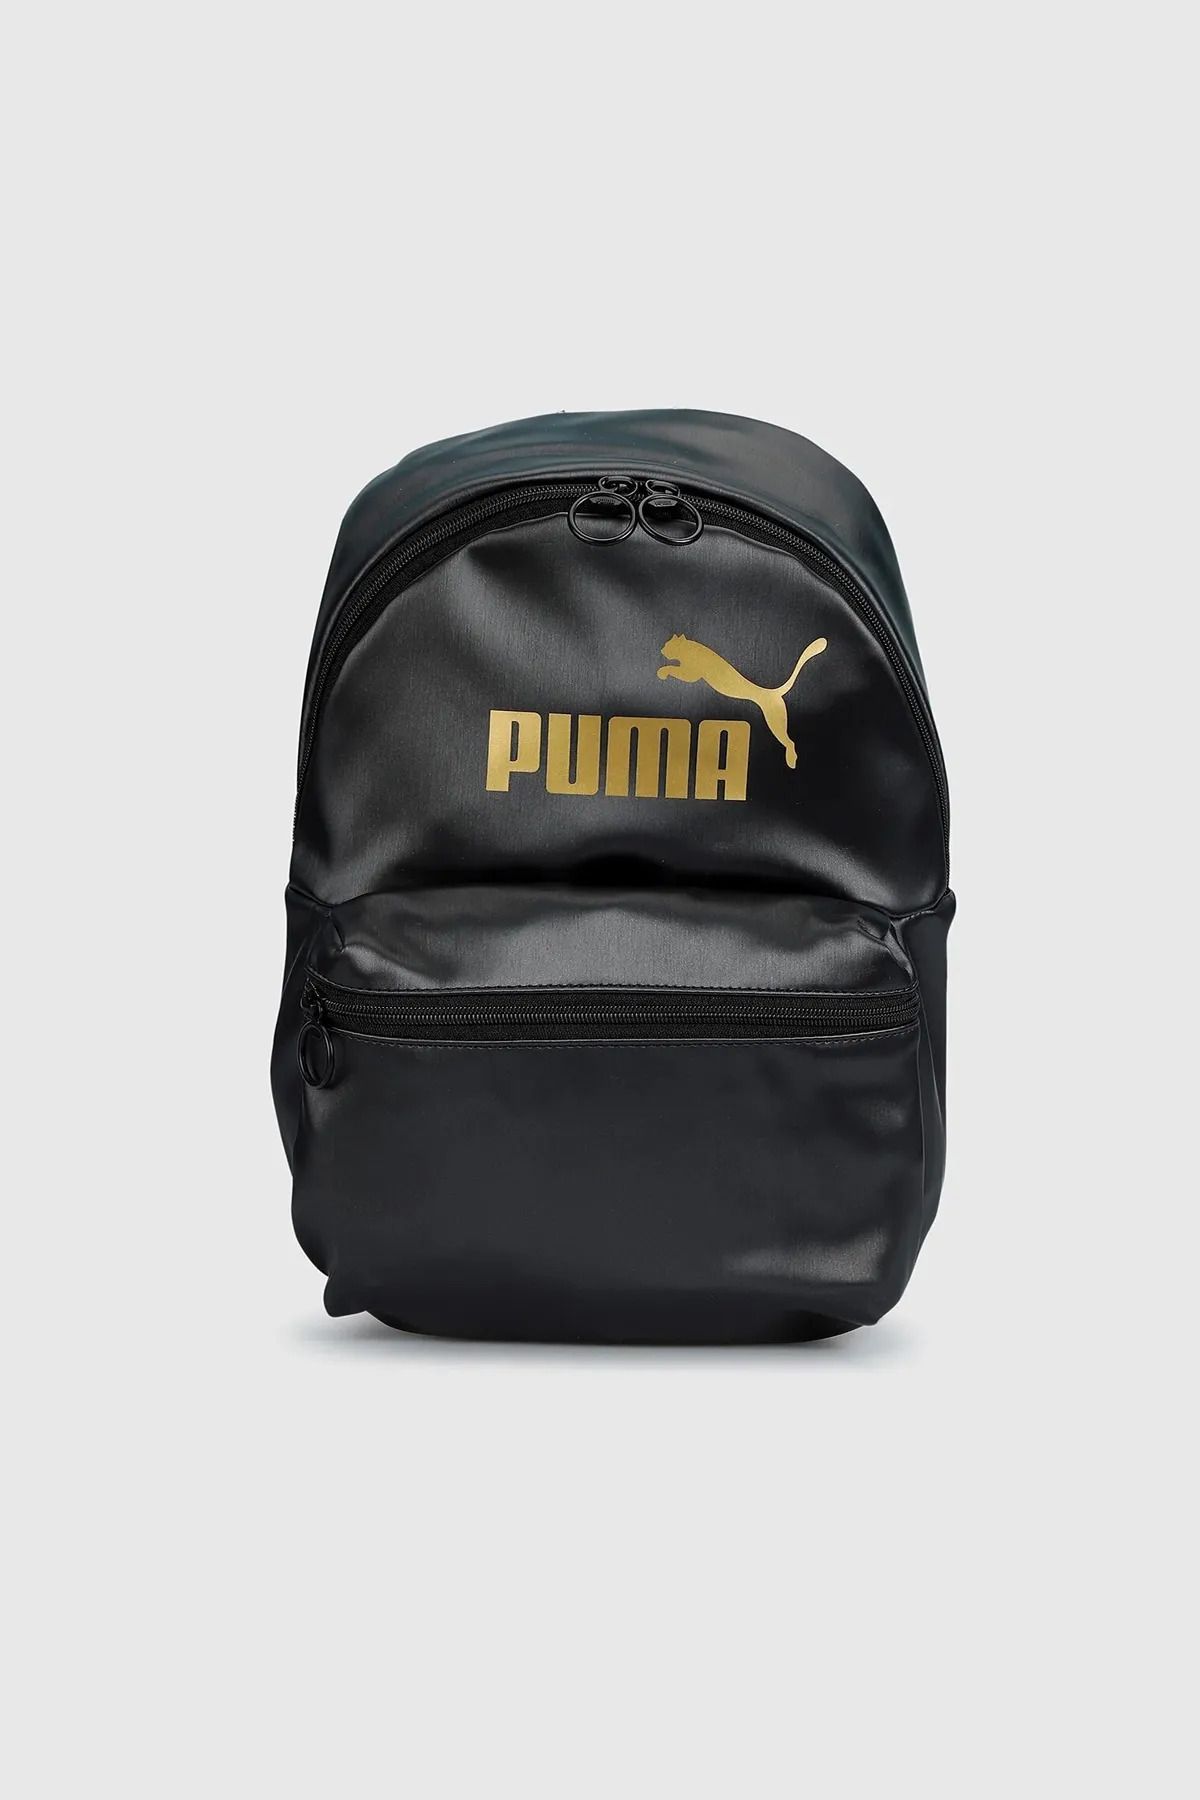 Puma Core Up Backpack Kadın Çanta 79476-01 Black